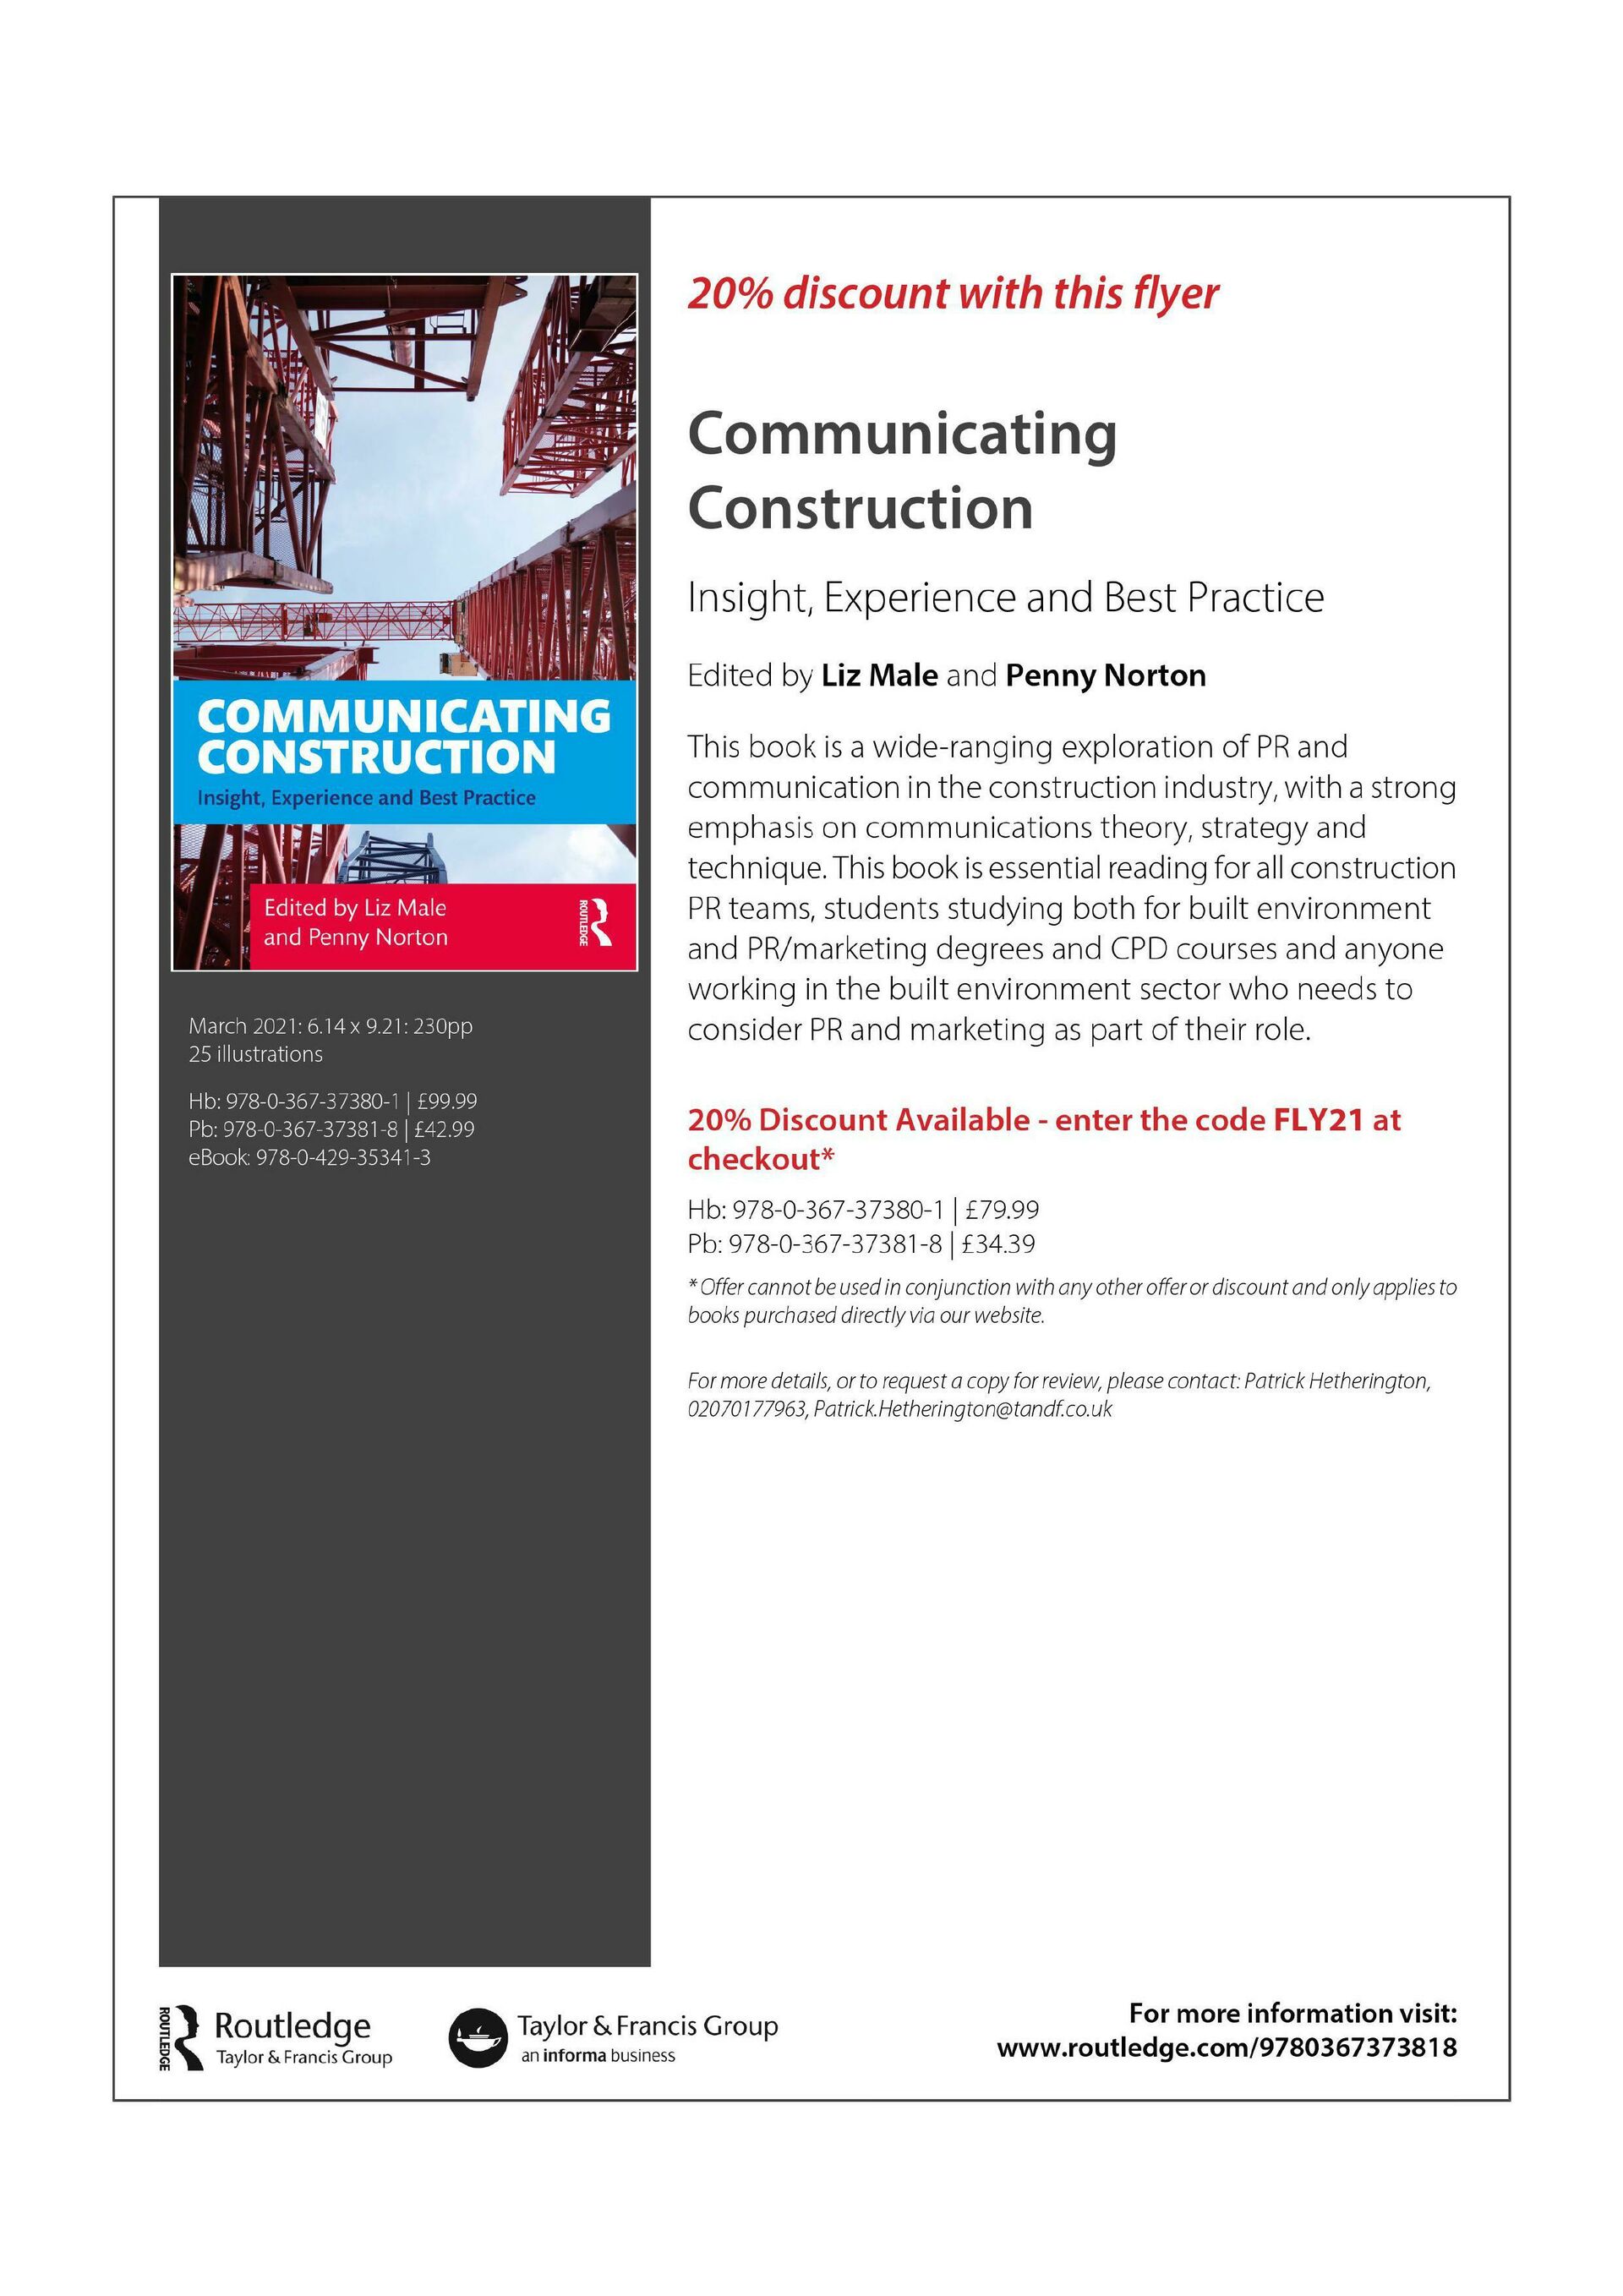 LMC Communicating Construction book flyer